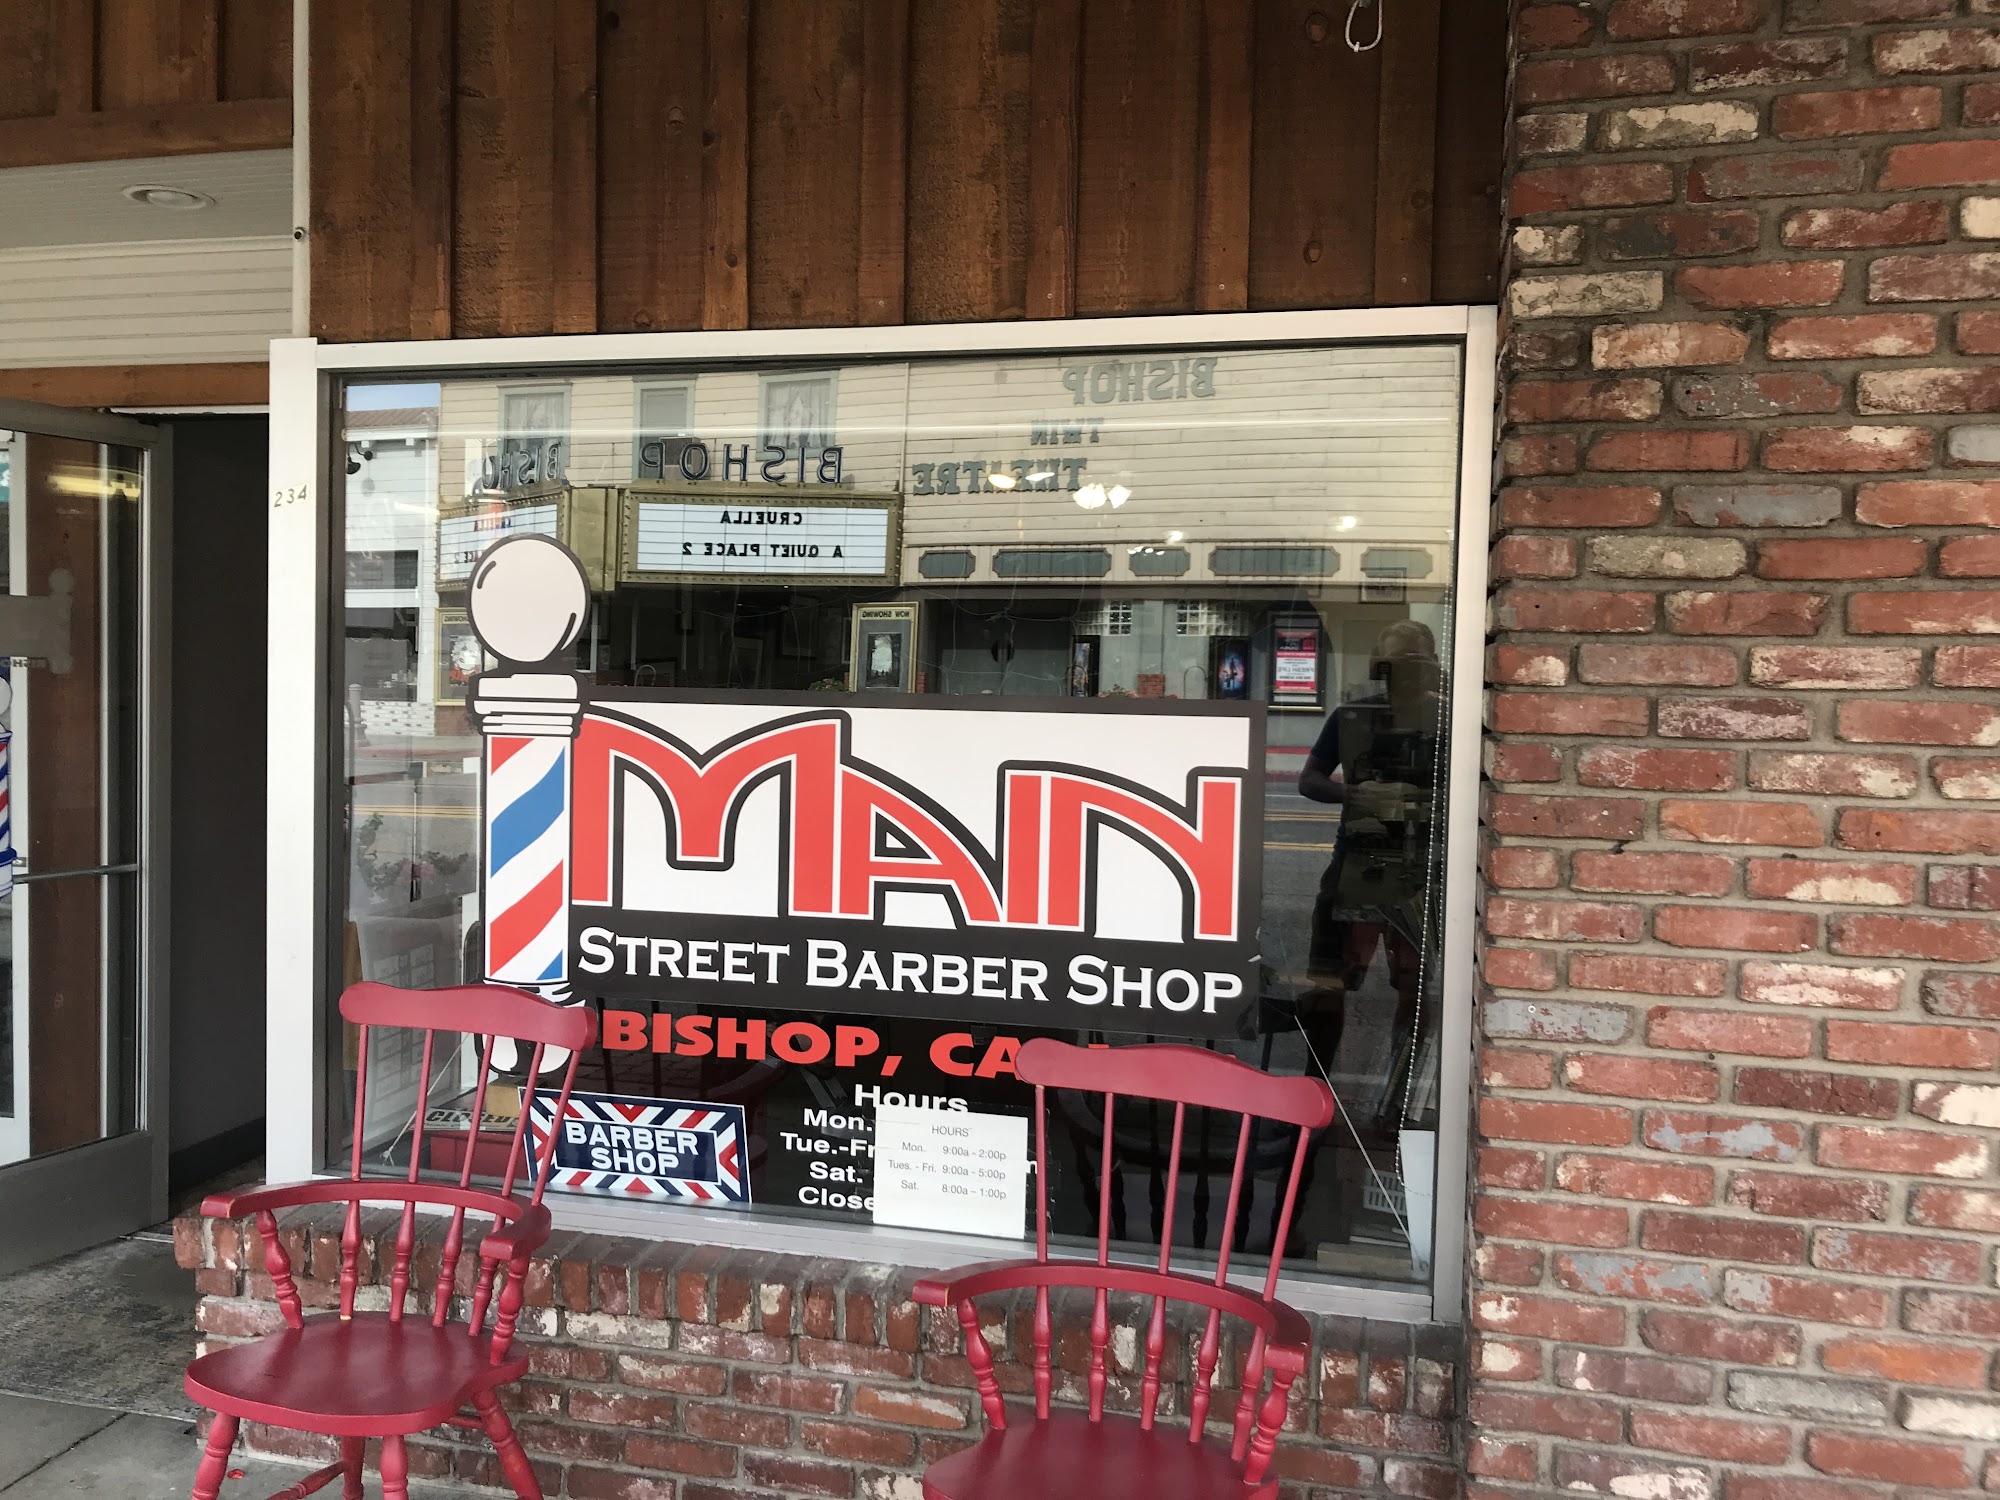 Main Street Barber Shop 234 N Main St, Bishop California 93514